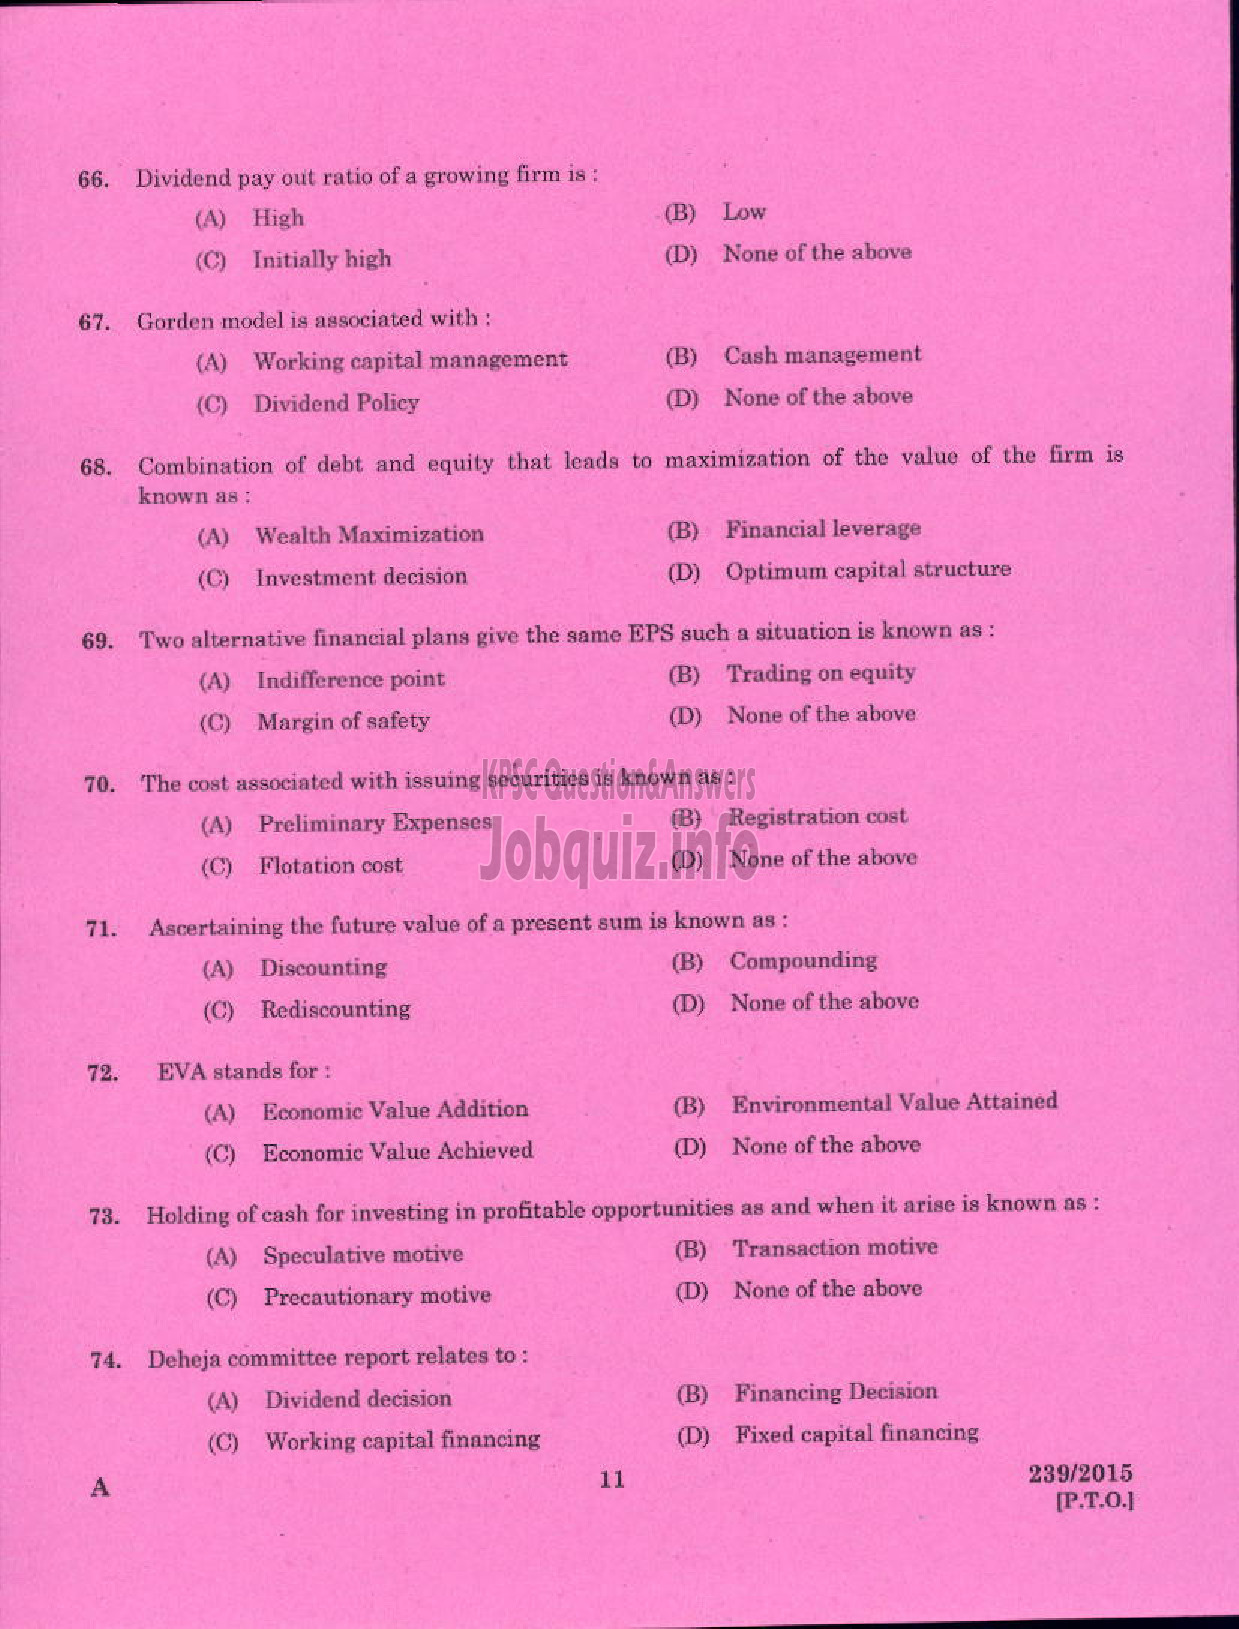 Kerala PSC Question Paper - ACCOUNTS OFFICER KELPAM-9